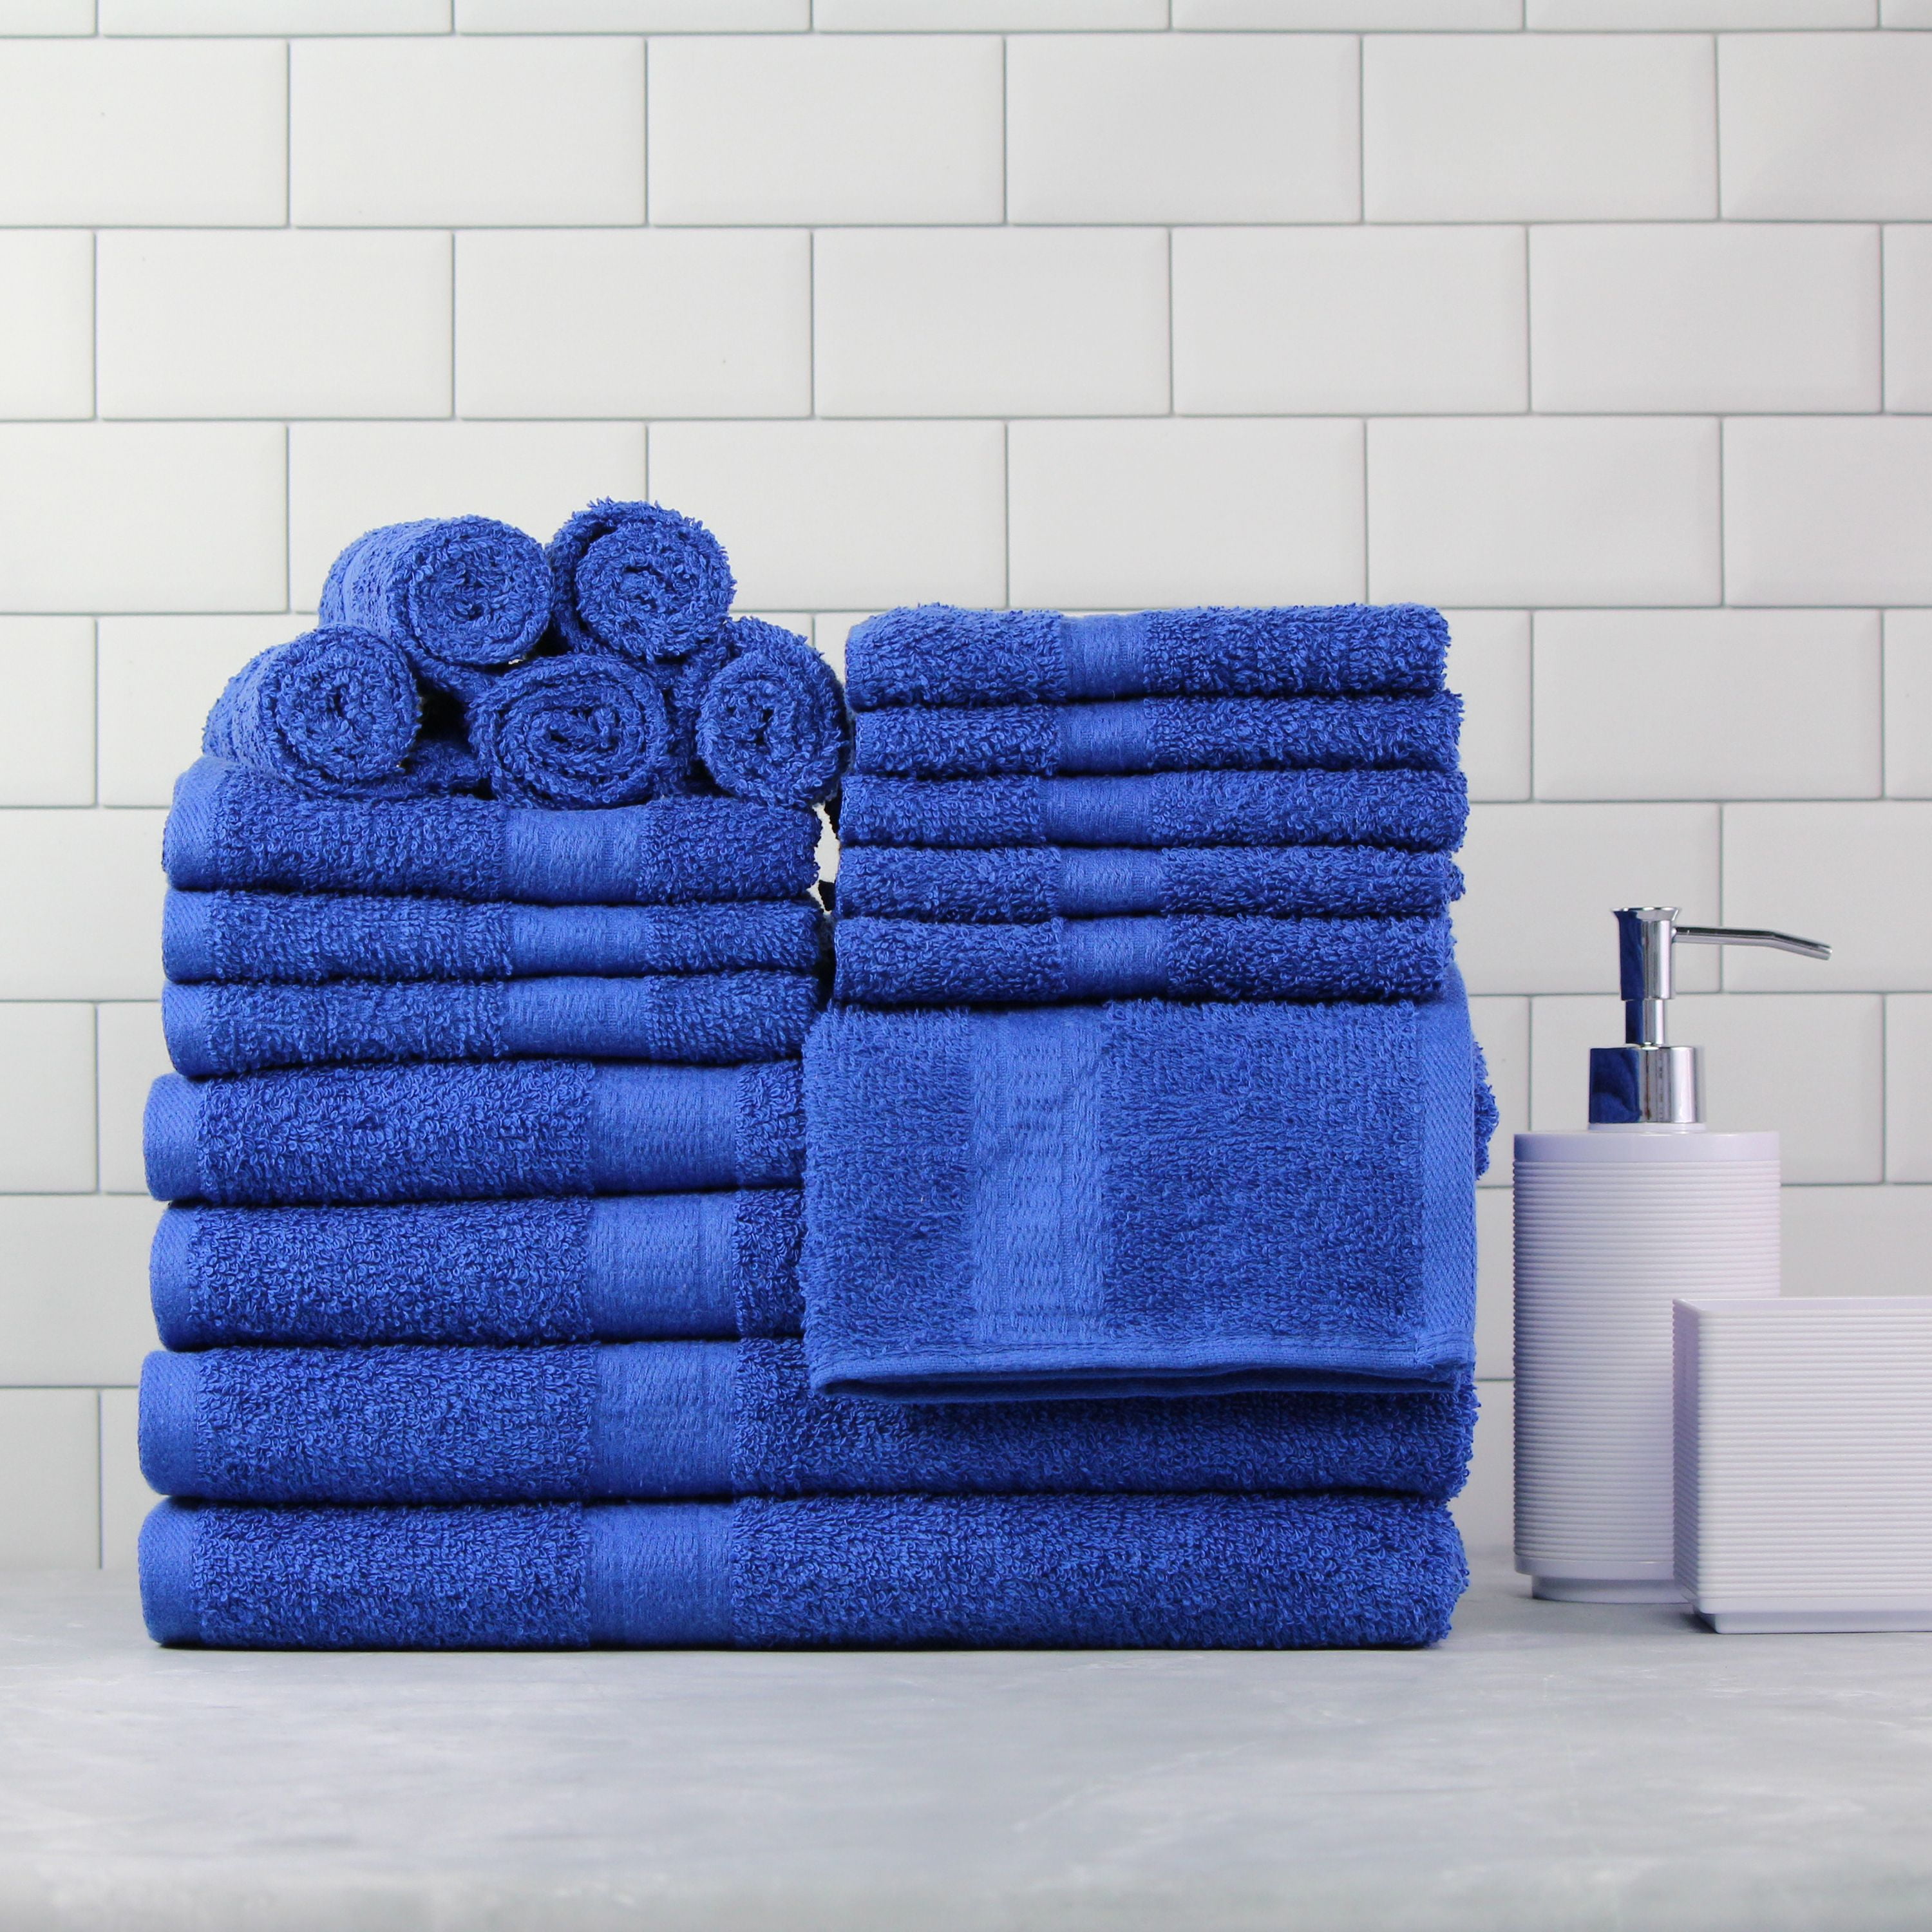 Mainstays 18-Piece Bath Towel Set, Royal Walmart.com